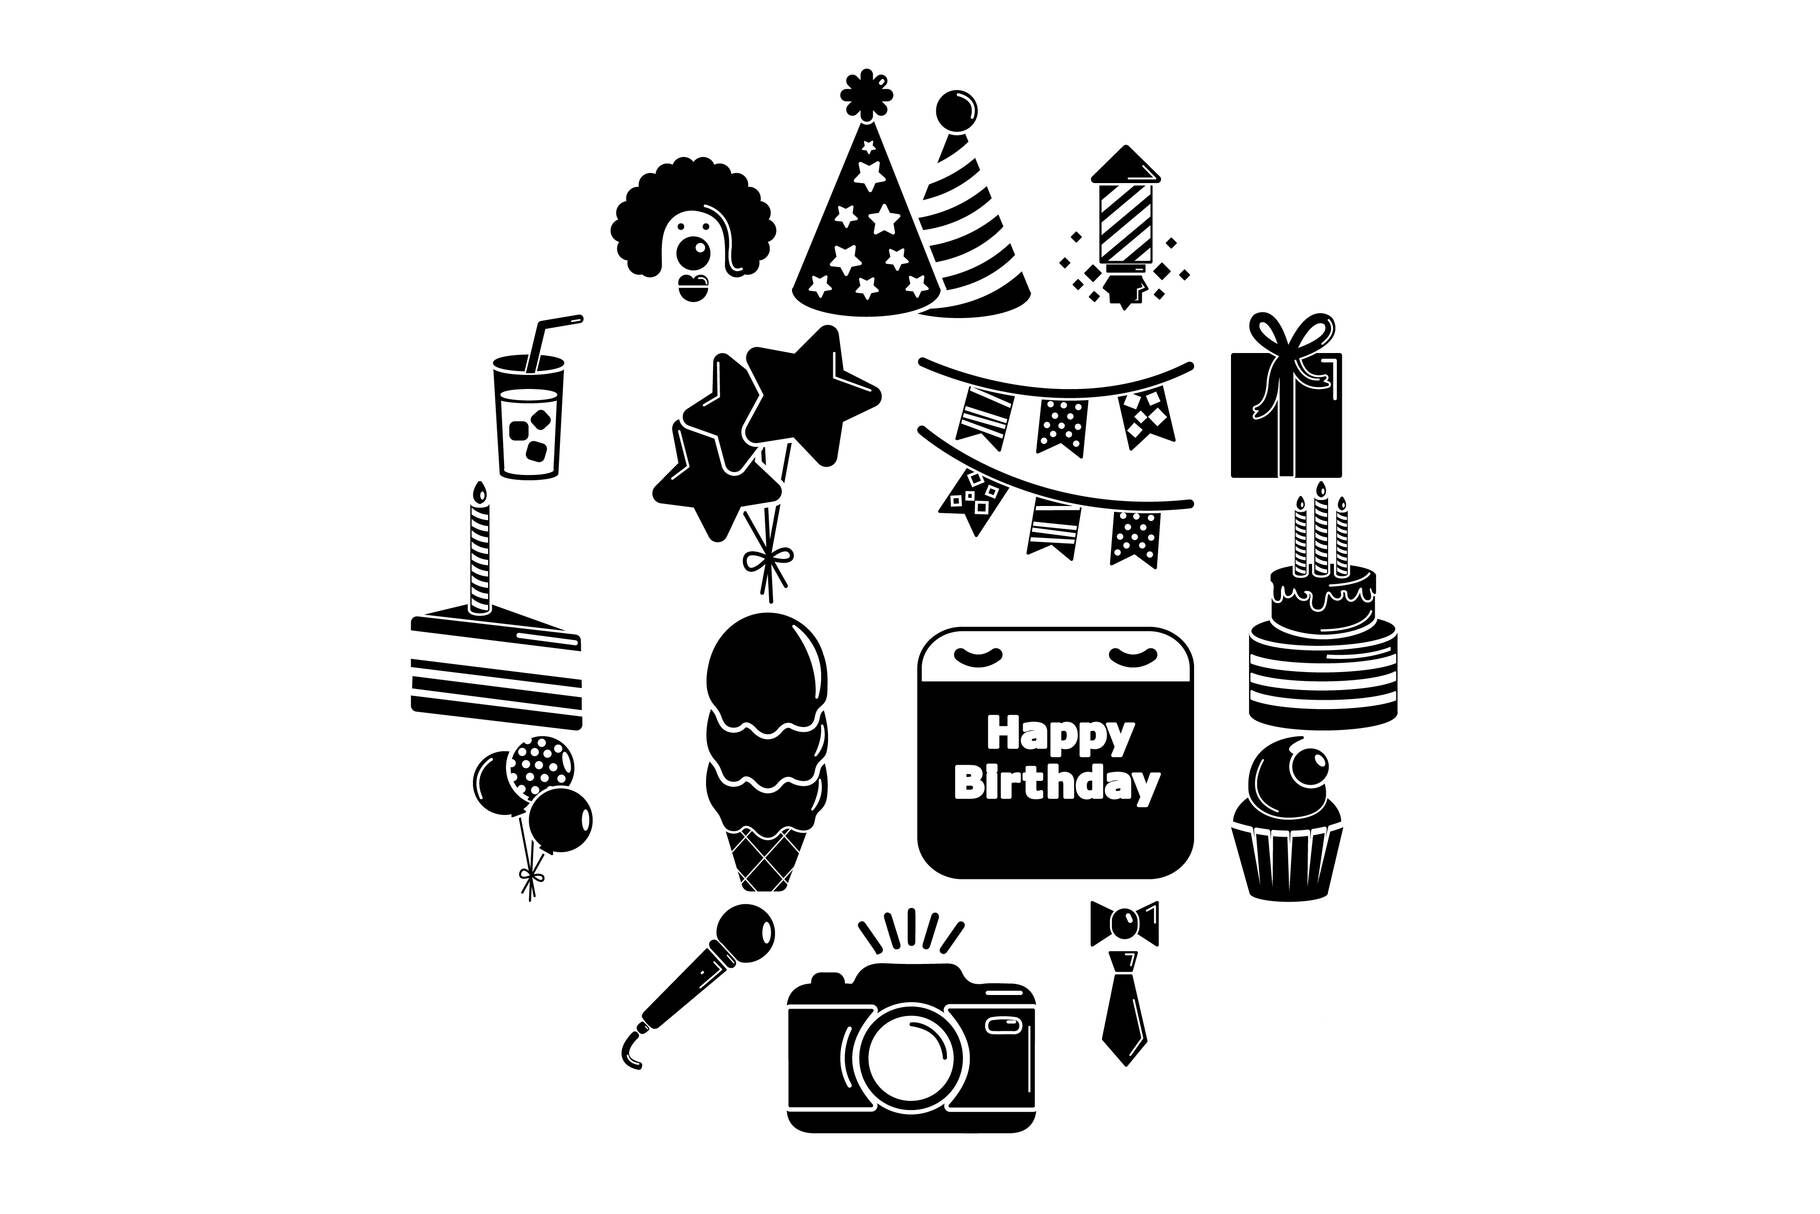 Happy Birthday Icons Set Simple Style By Ylivdesign Thehungryjpeg Com